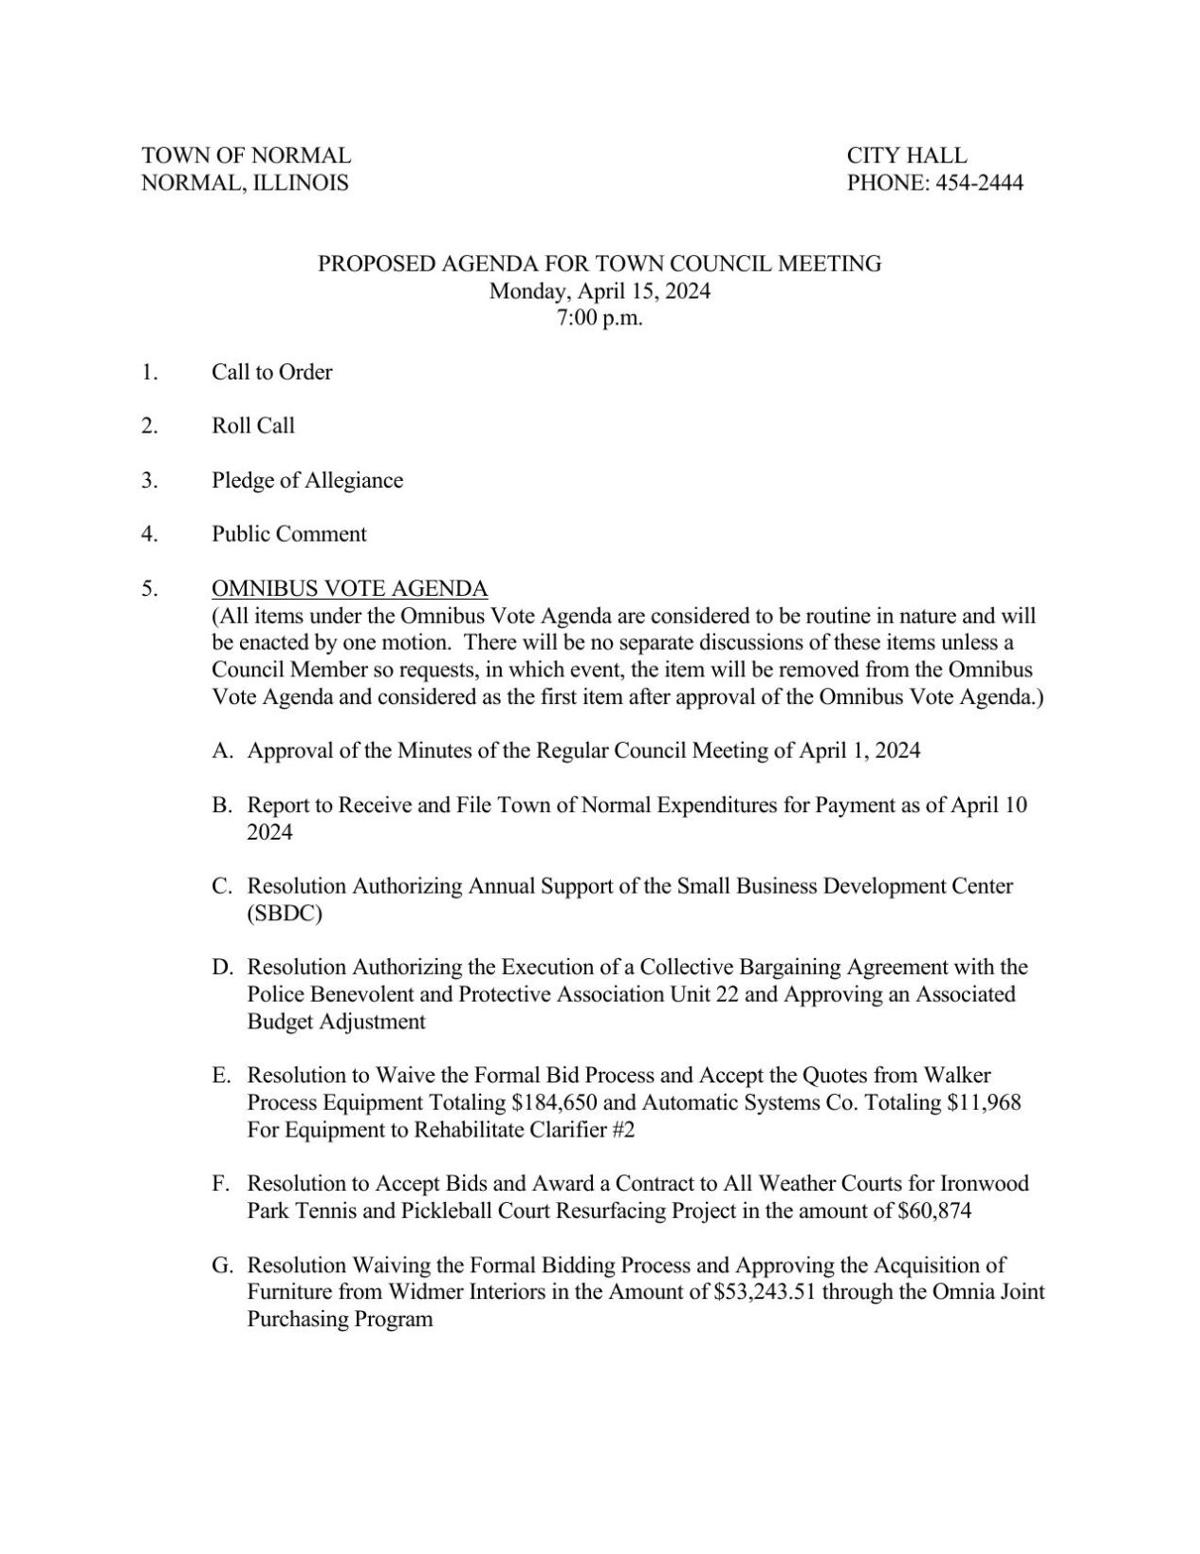 Normal Town Council Agenda April 15, 2024